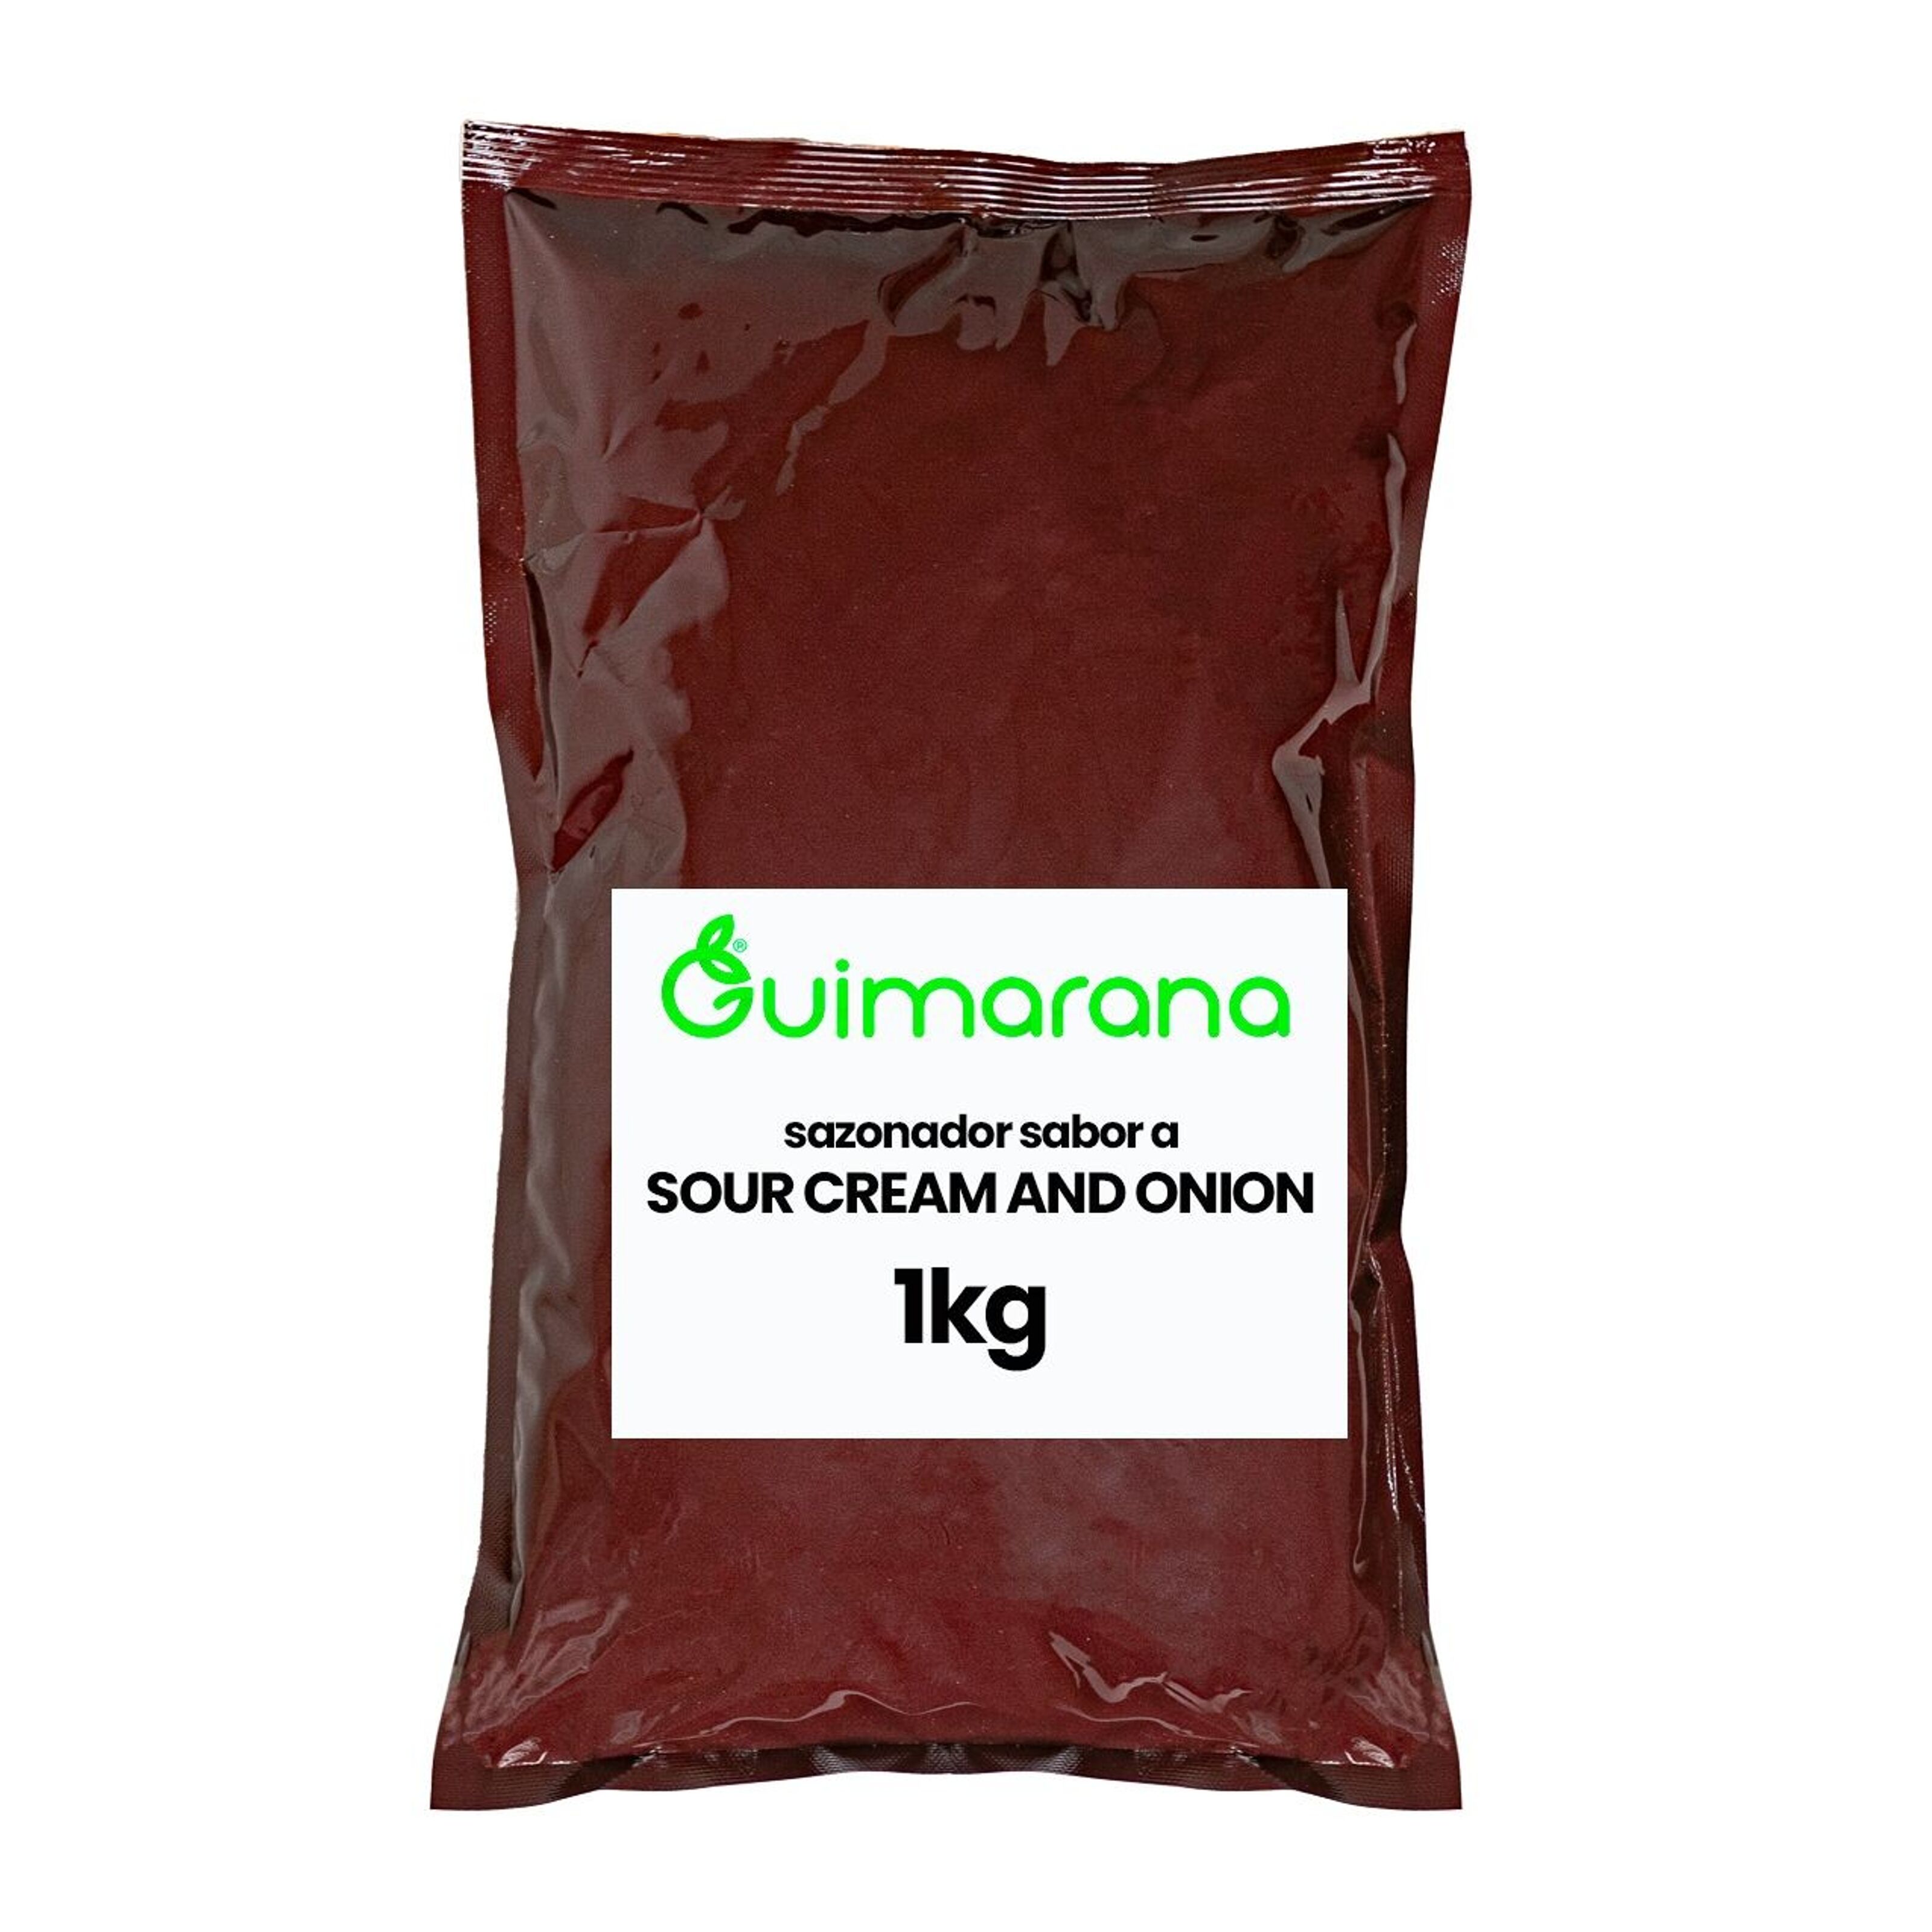 Vegetable seasoning flavor SOUR CREAM AND ONION of Guimarana